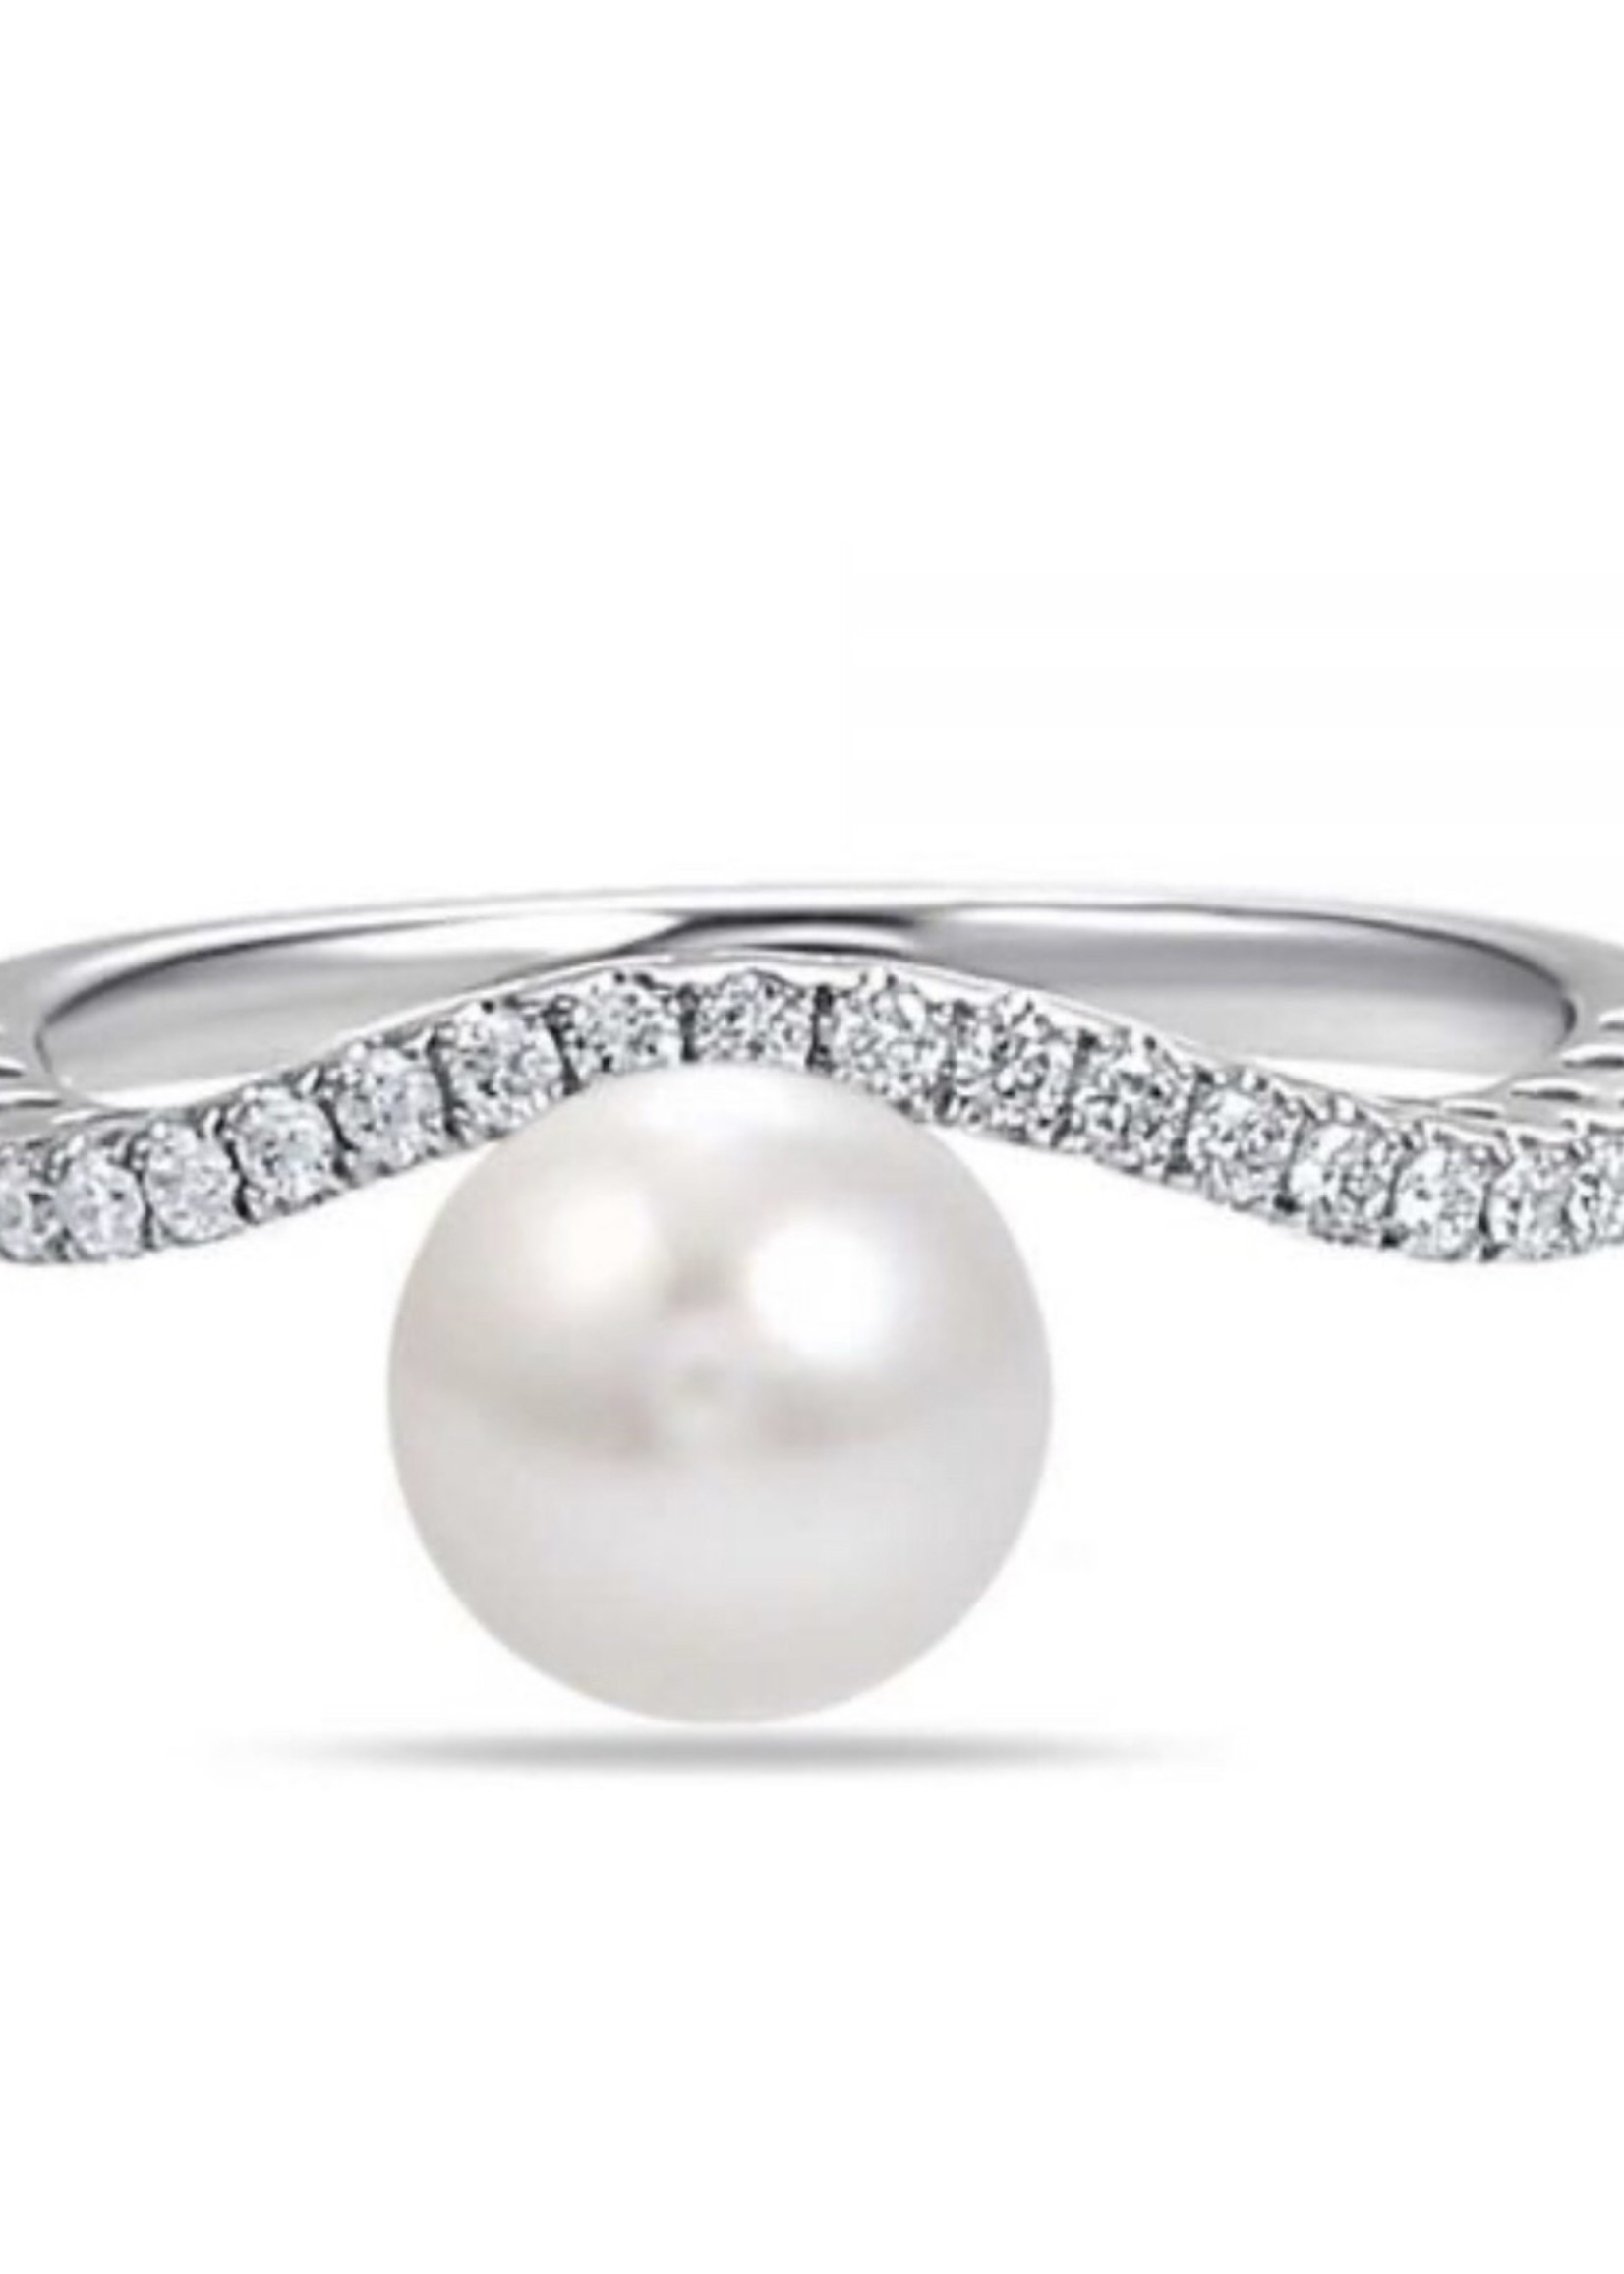 Shula NY 14kW Diamond and Pearl "Wave" Ring